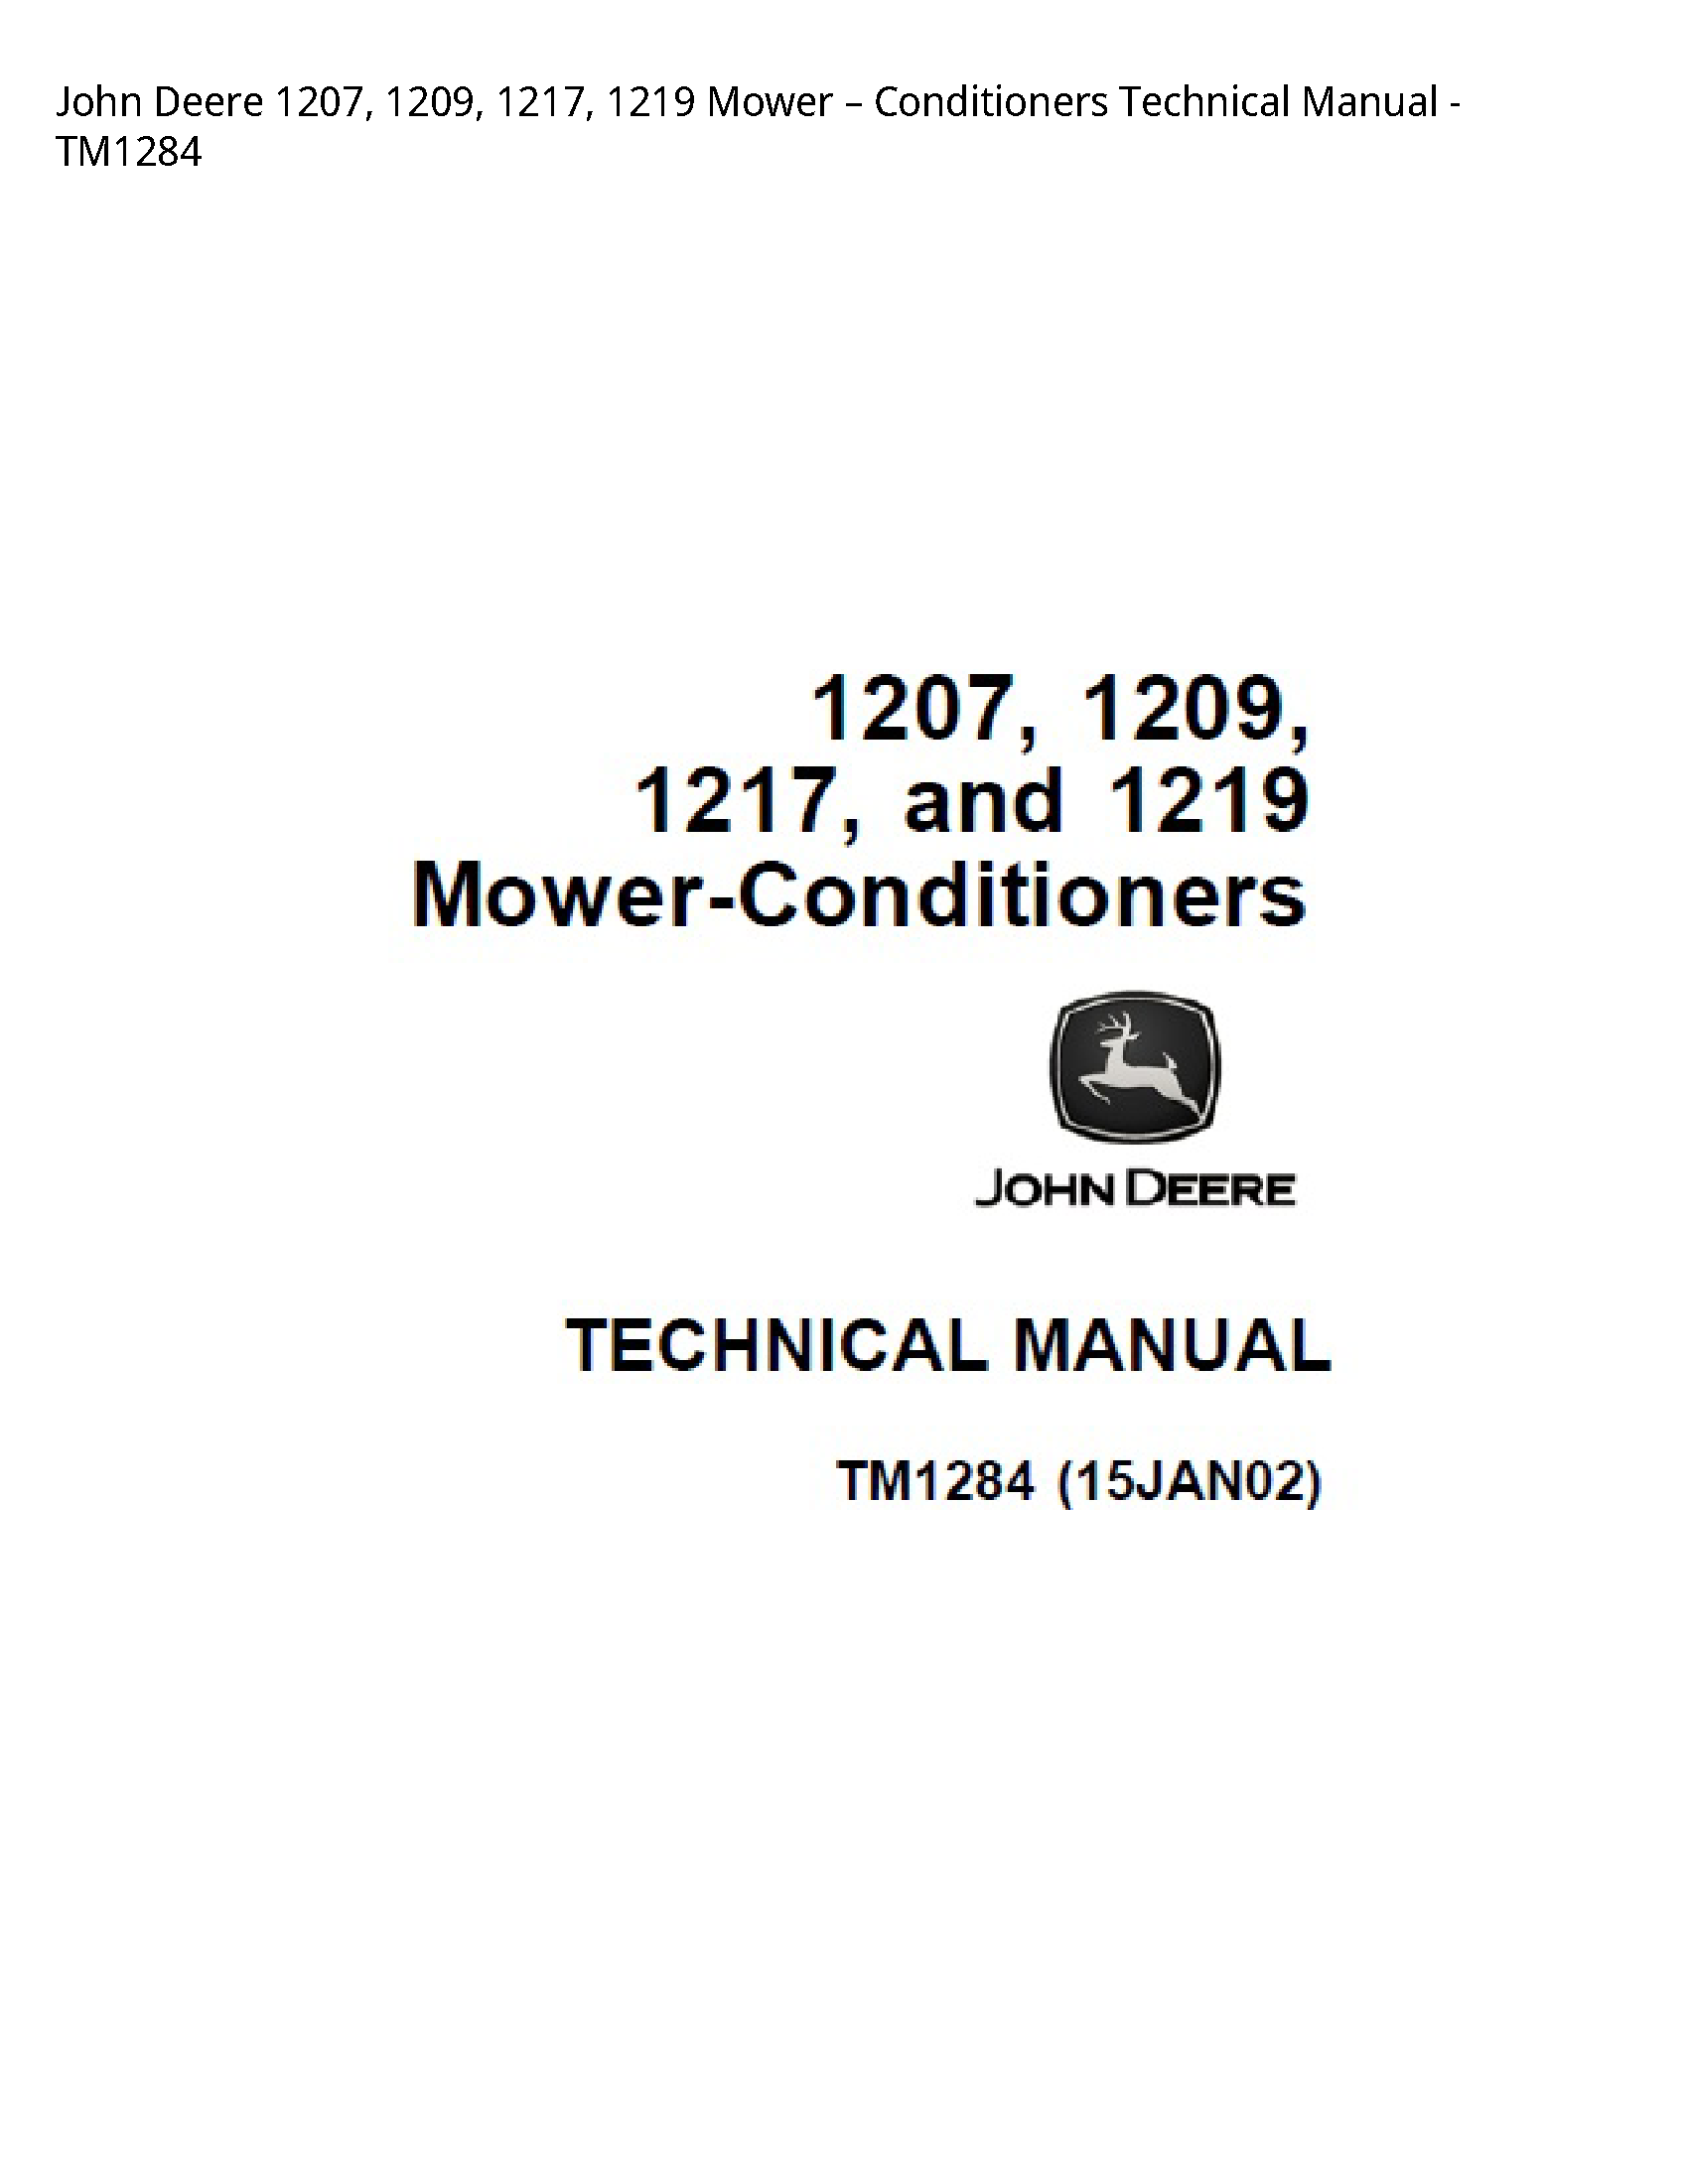 John Deere 1207 Mower Conditioners Technical manual